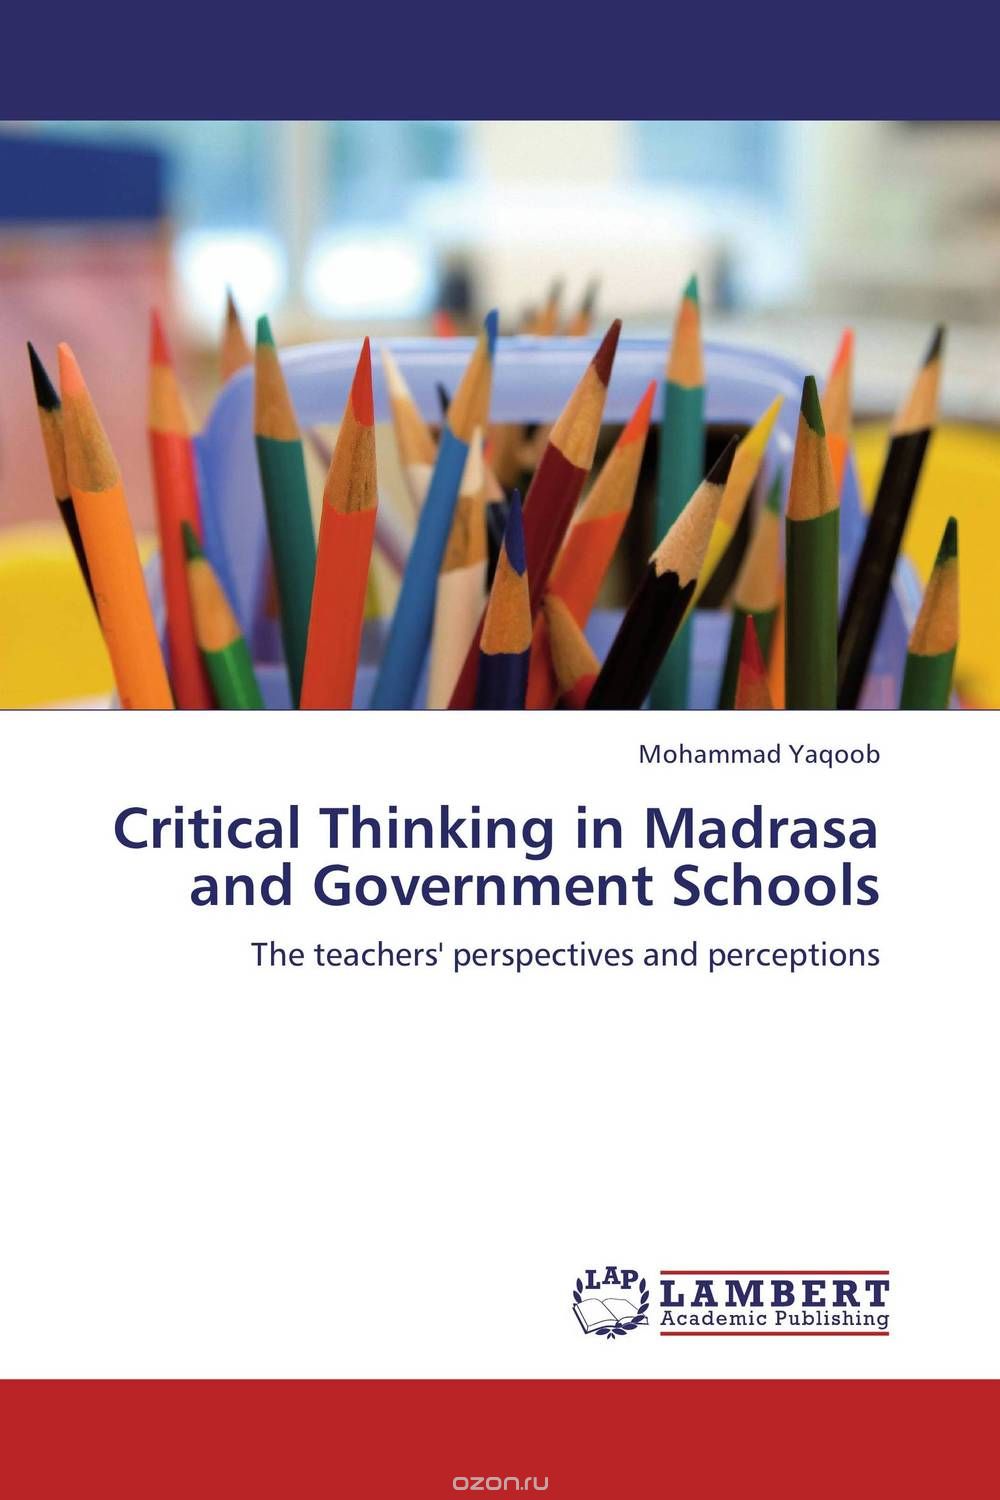 Скачать книгу "Critical Thinking in Madrasa and Government Schools"